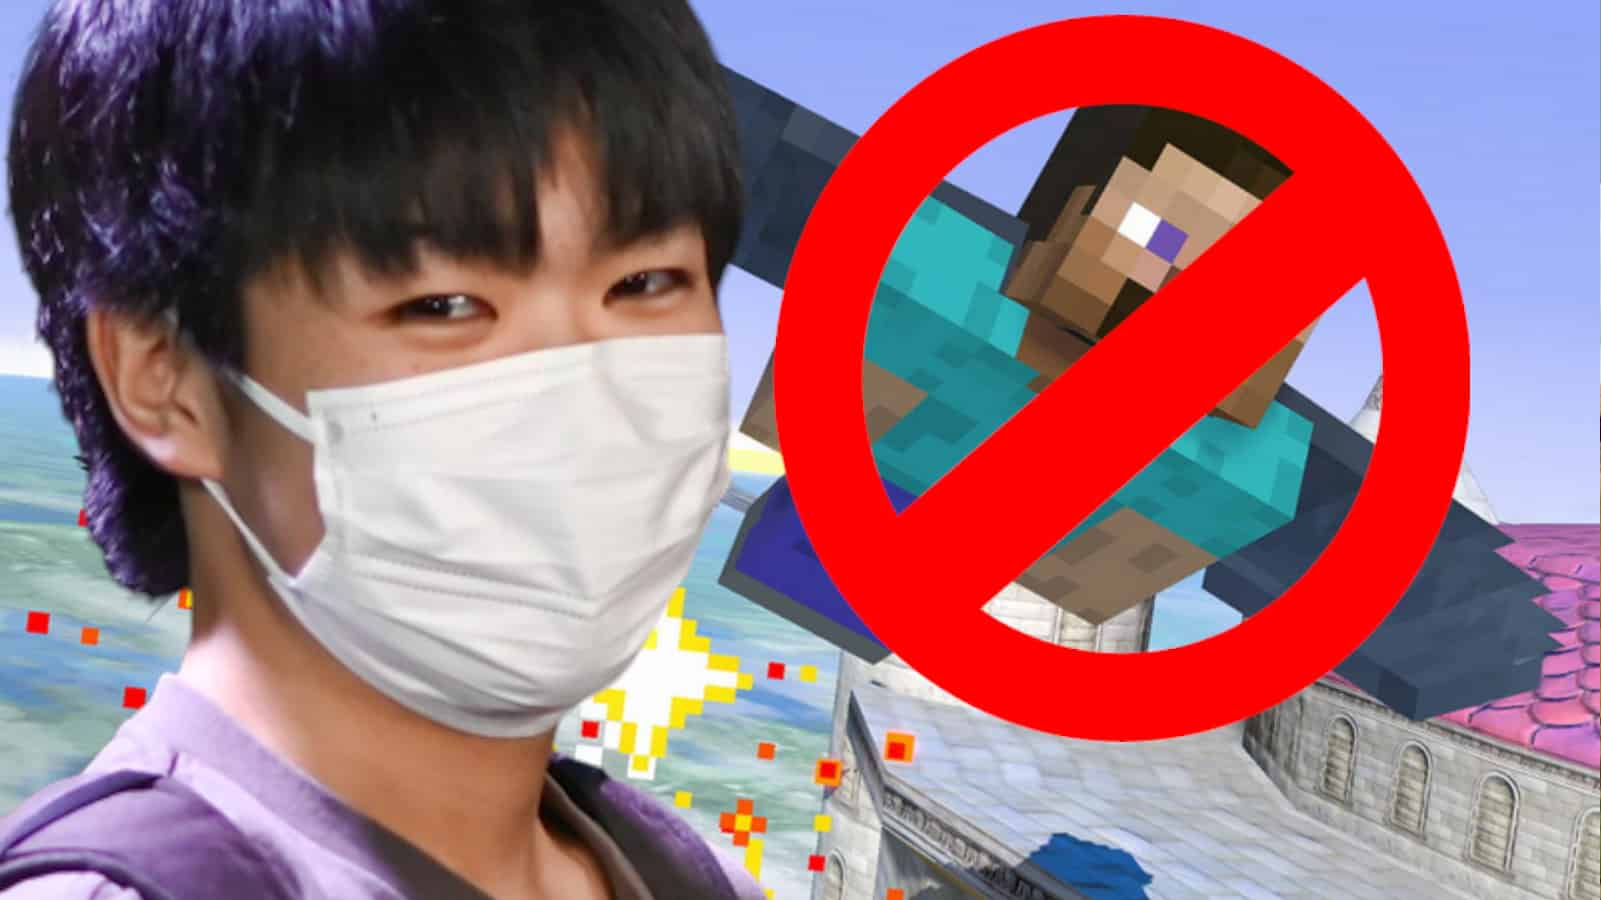 Steve banned in smash ultimate